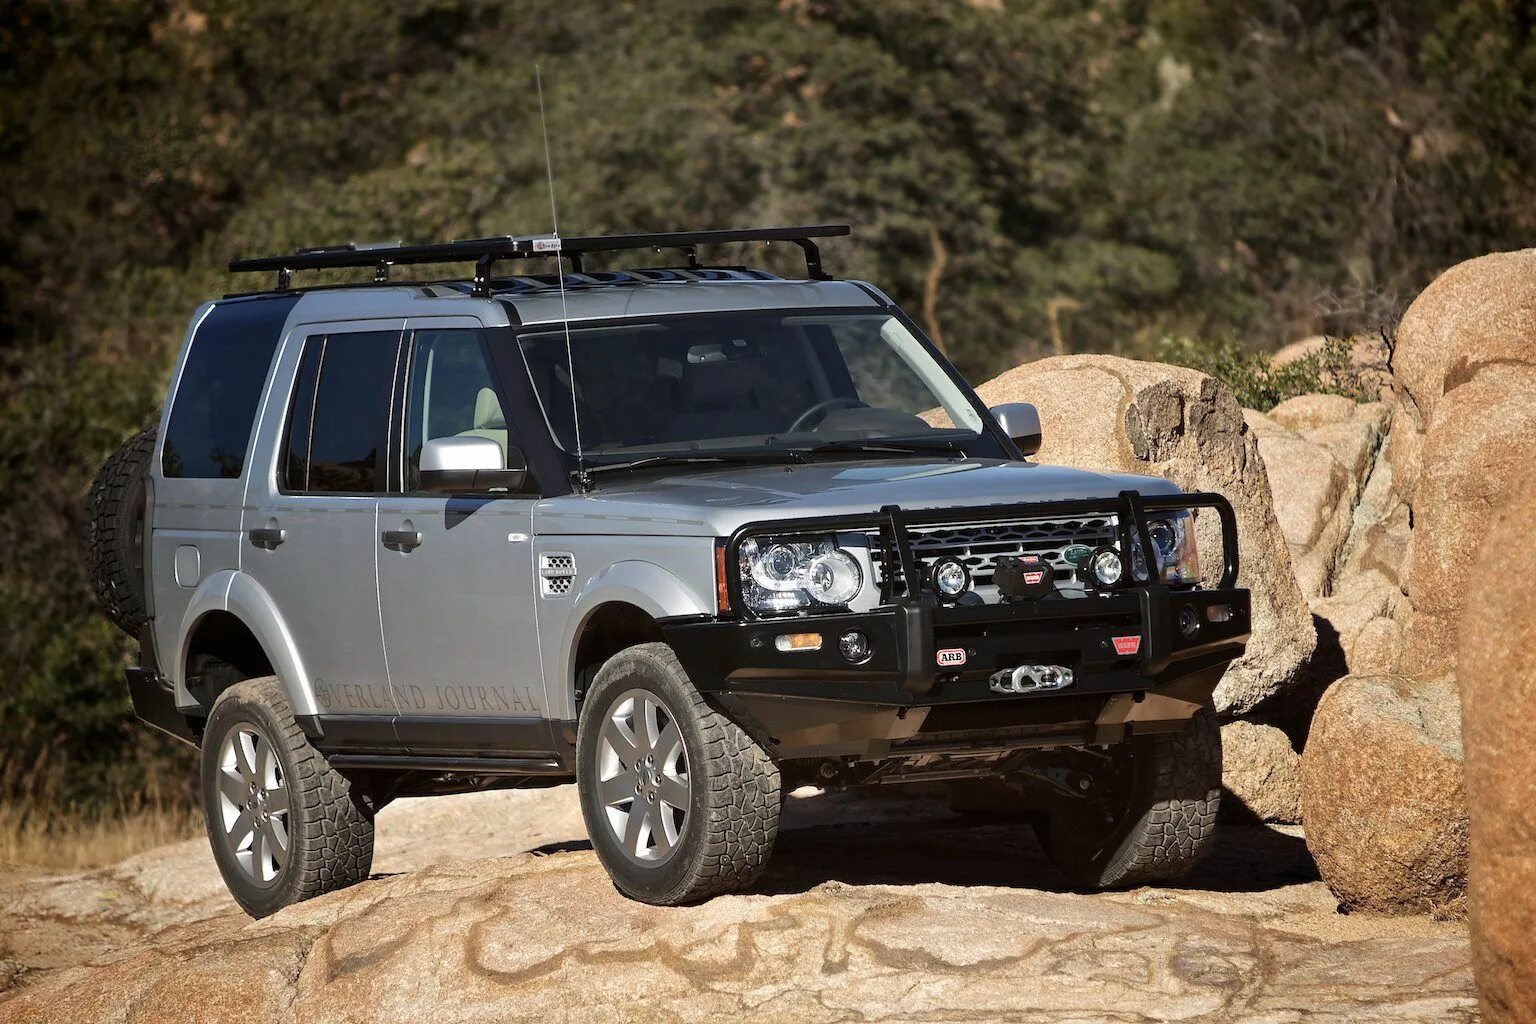 Ленд Ровер Дискавери 4. Ленд Ровер Дискавери 4 Expedition. Land Rover Discovery 3 Expedition. Land Rover lr3/Discovery 3.